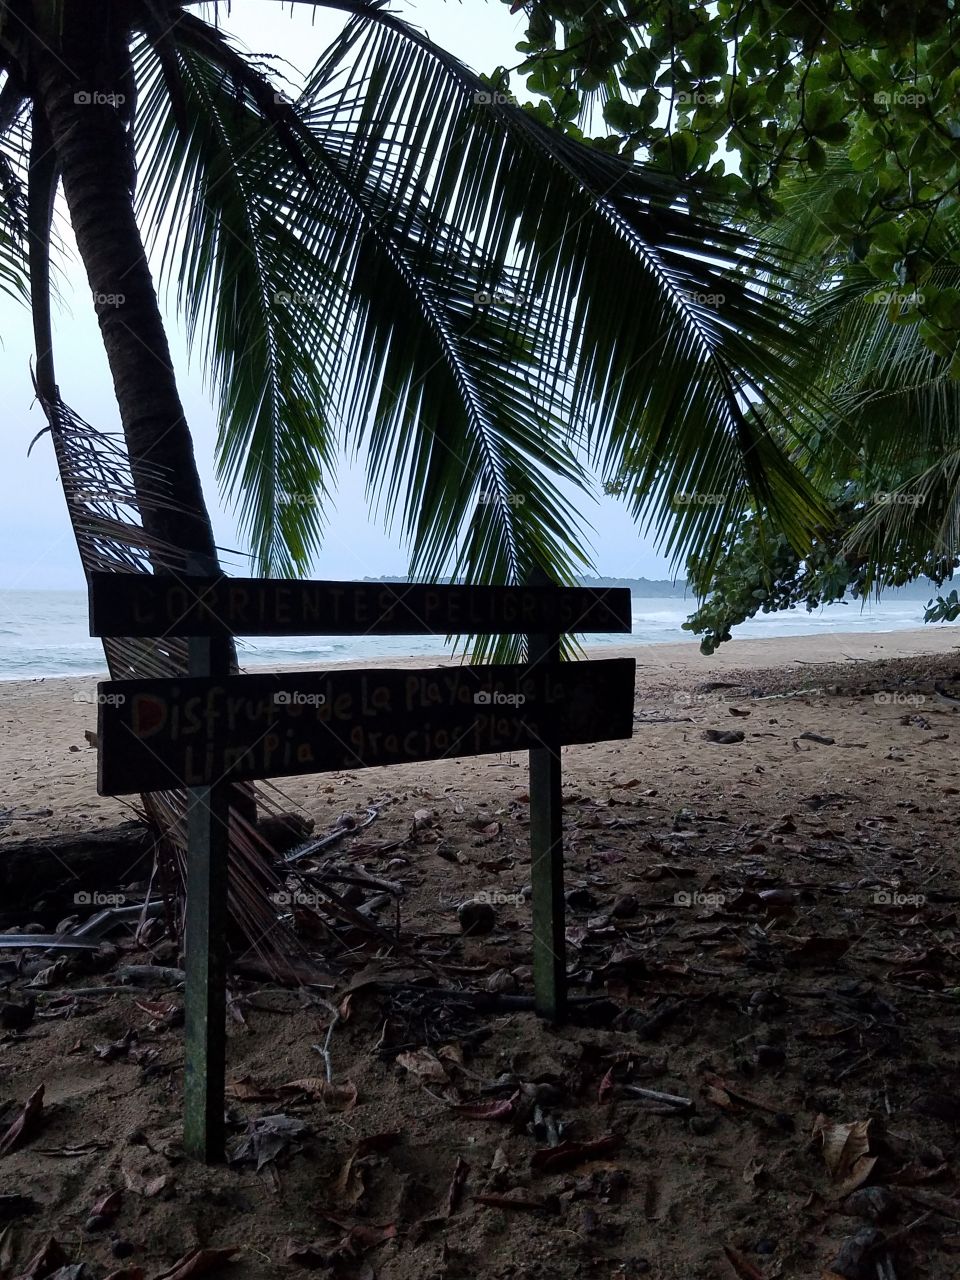 'BEACH'
PUNTA UVA, COSTA RICA